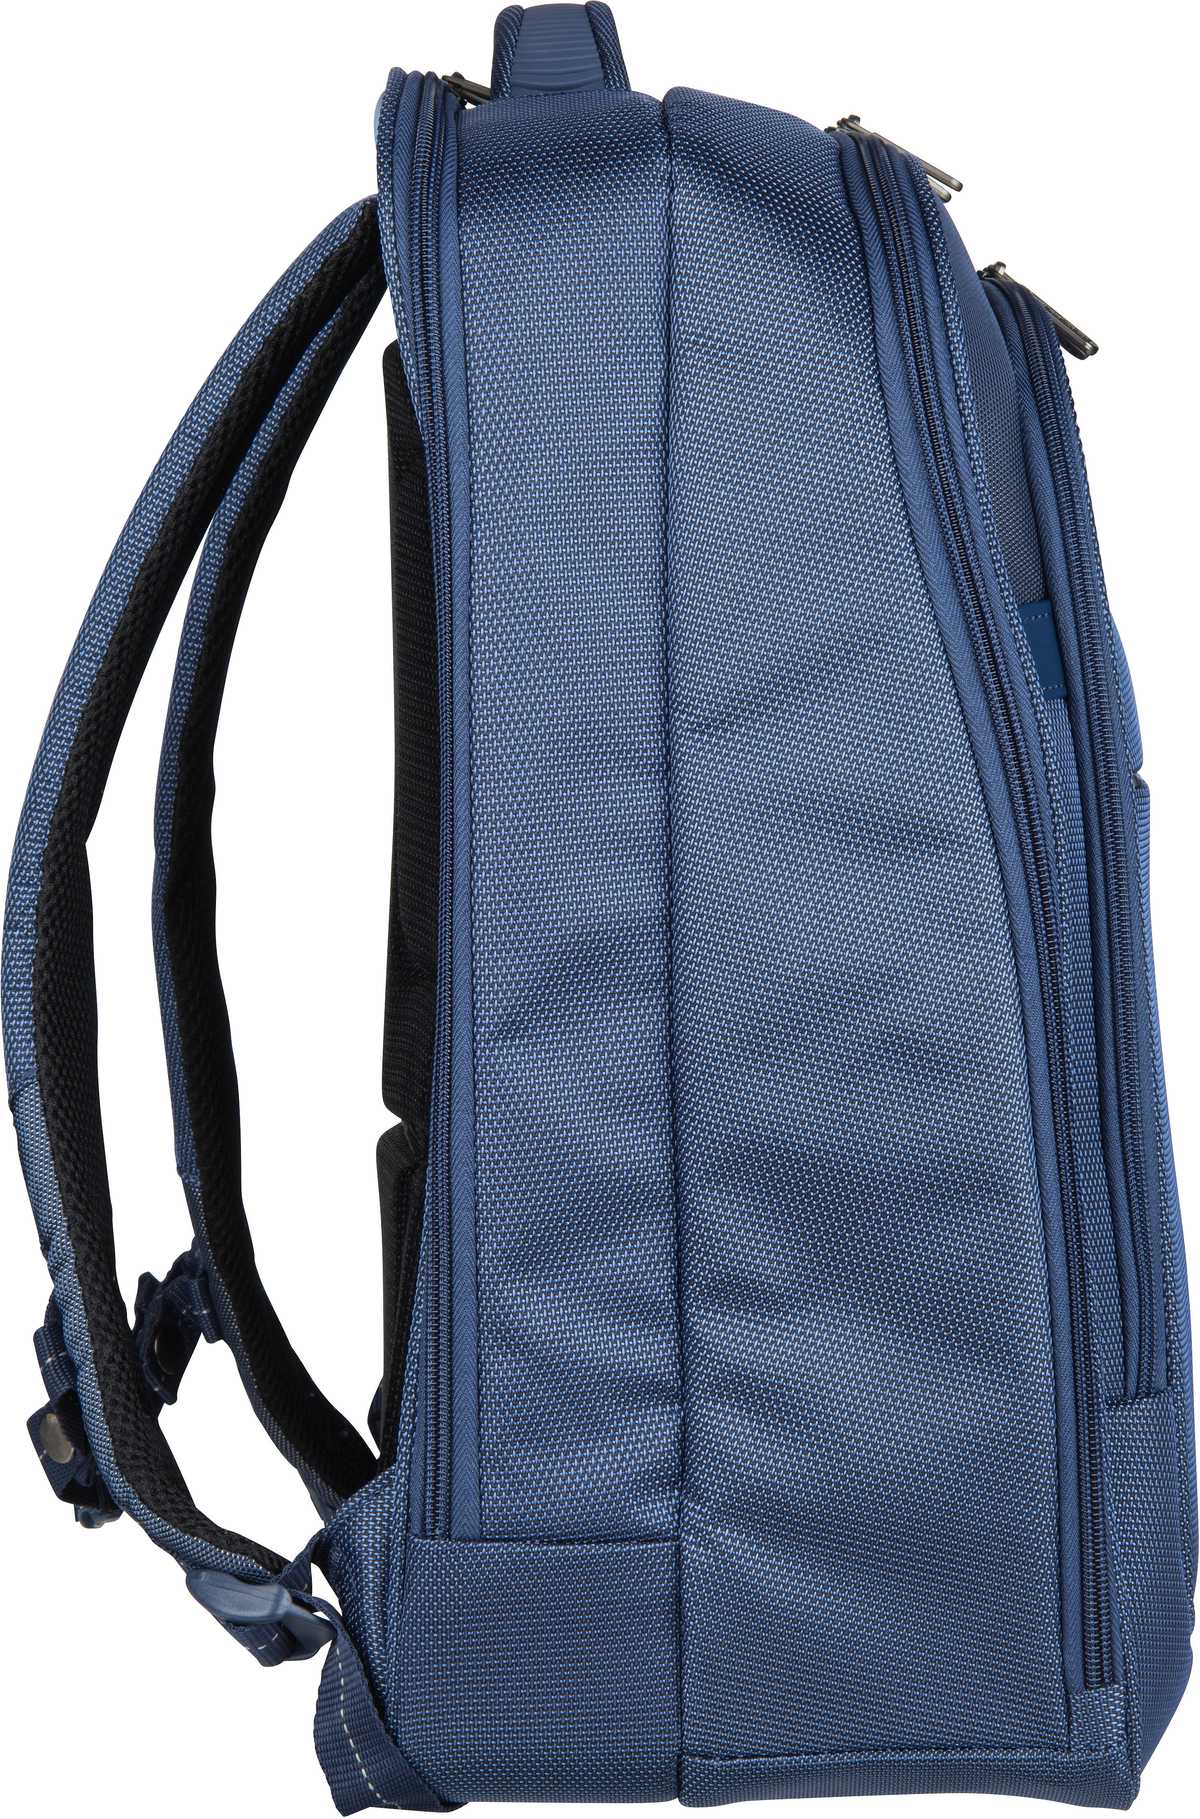 Titan Prime Backpack - Navy